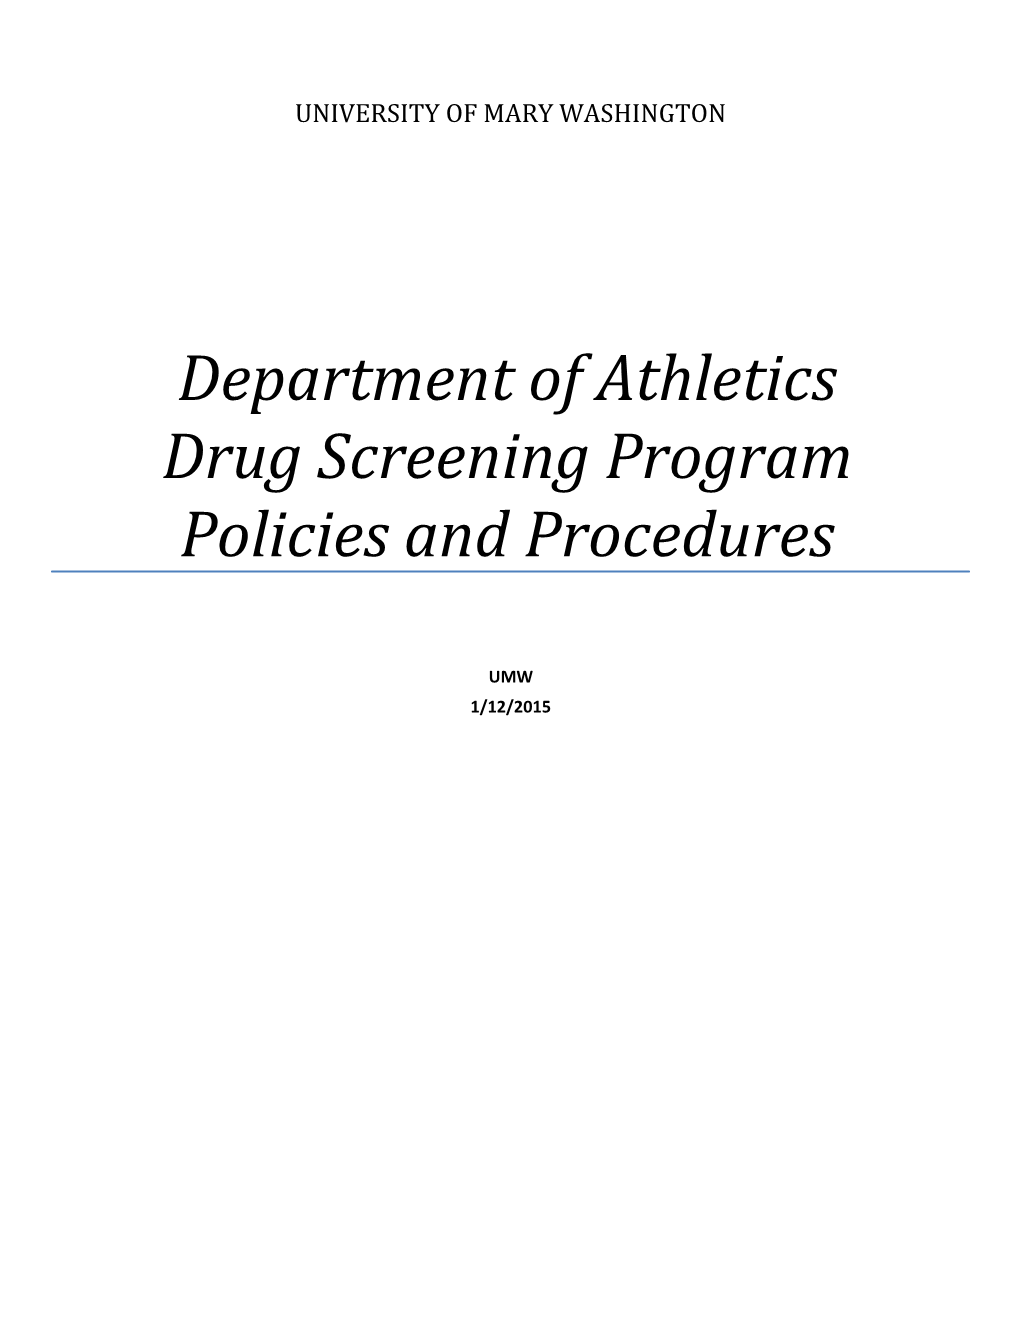 Department of Athletics Drug Screening Program Policies and Procedures